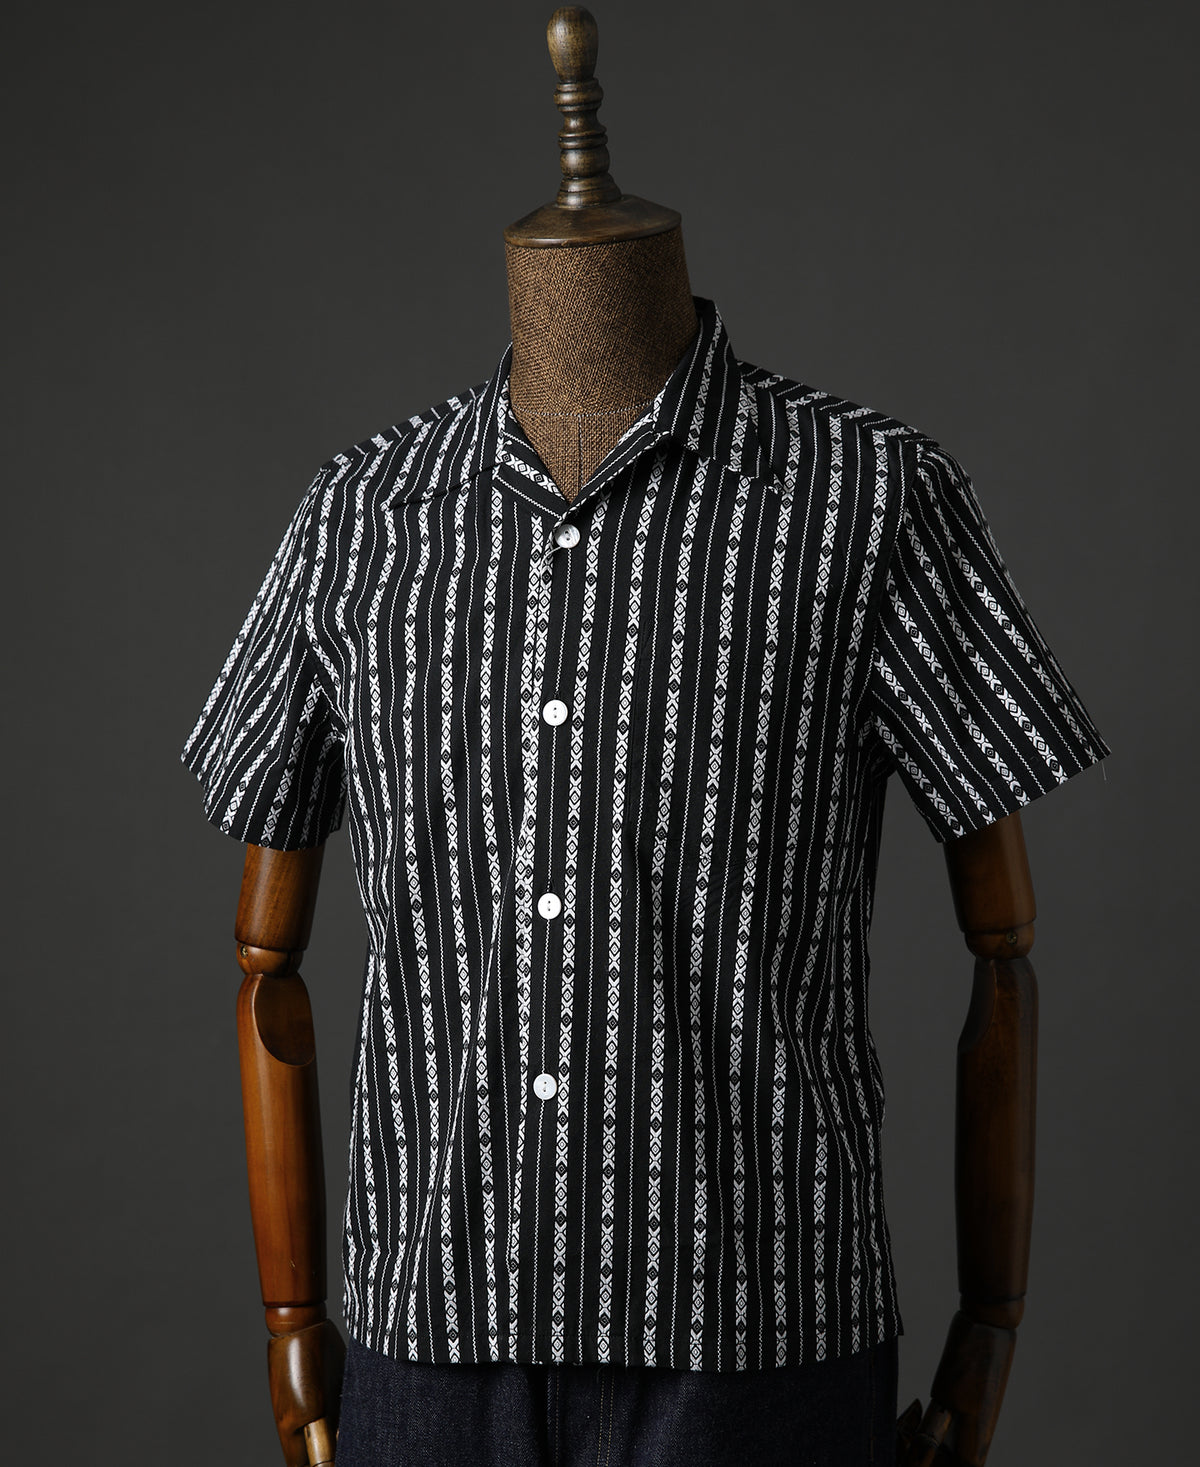 Camp-Collar Jacquard Stripe Short Sleeve Shirt - Black/White